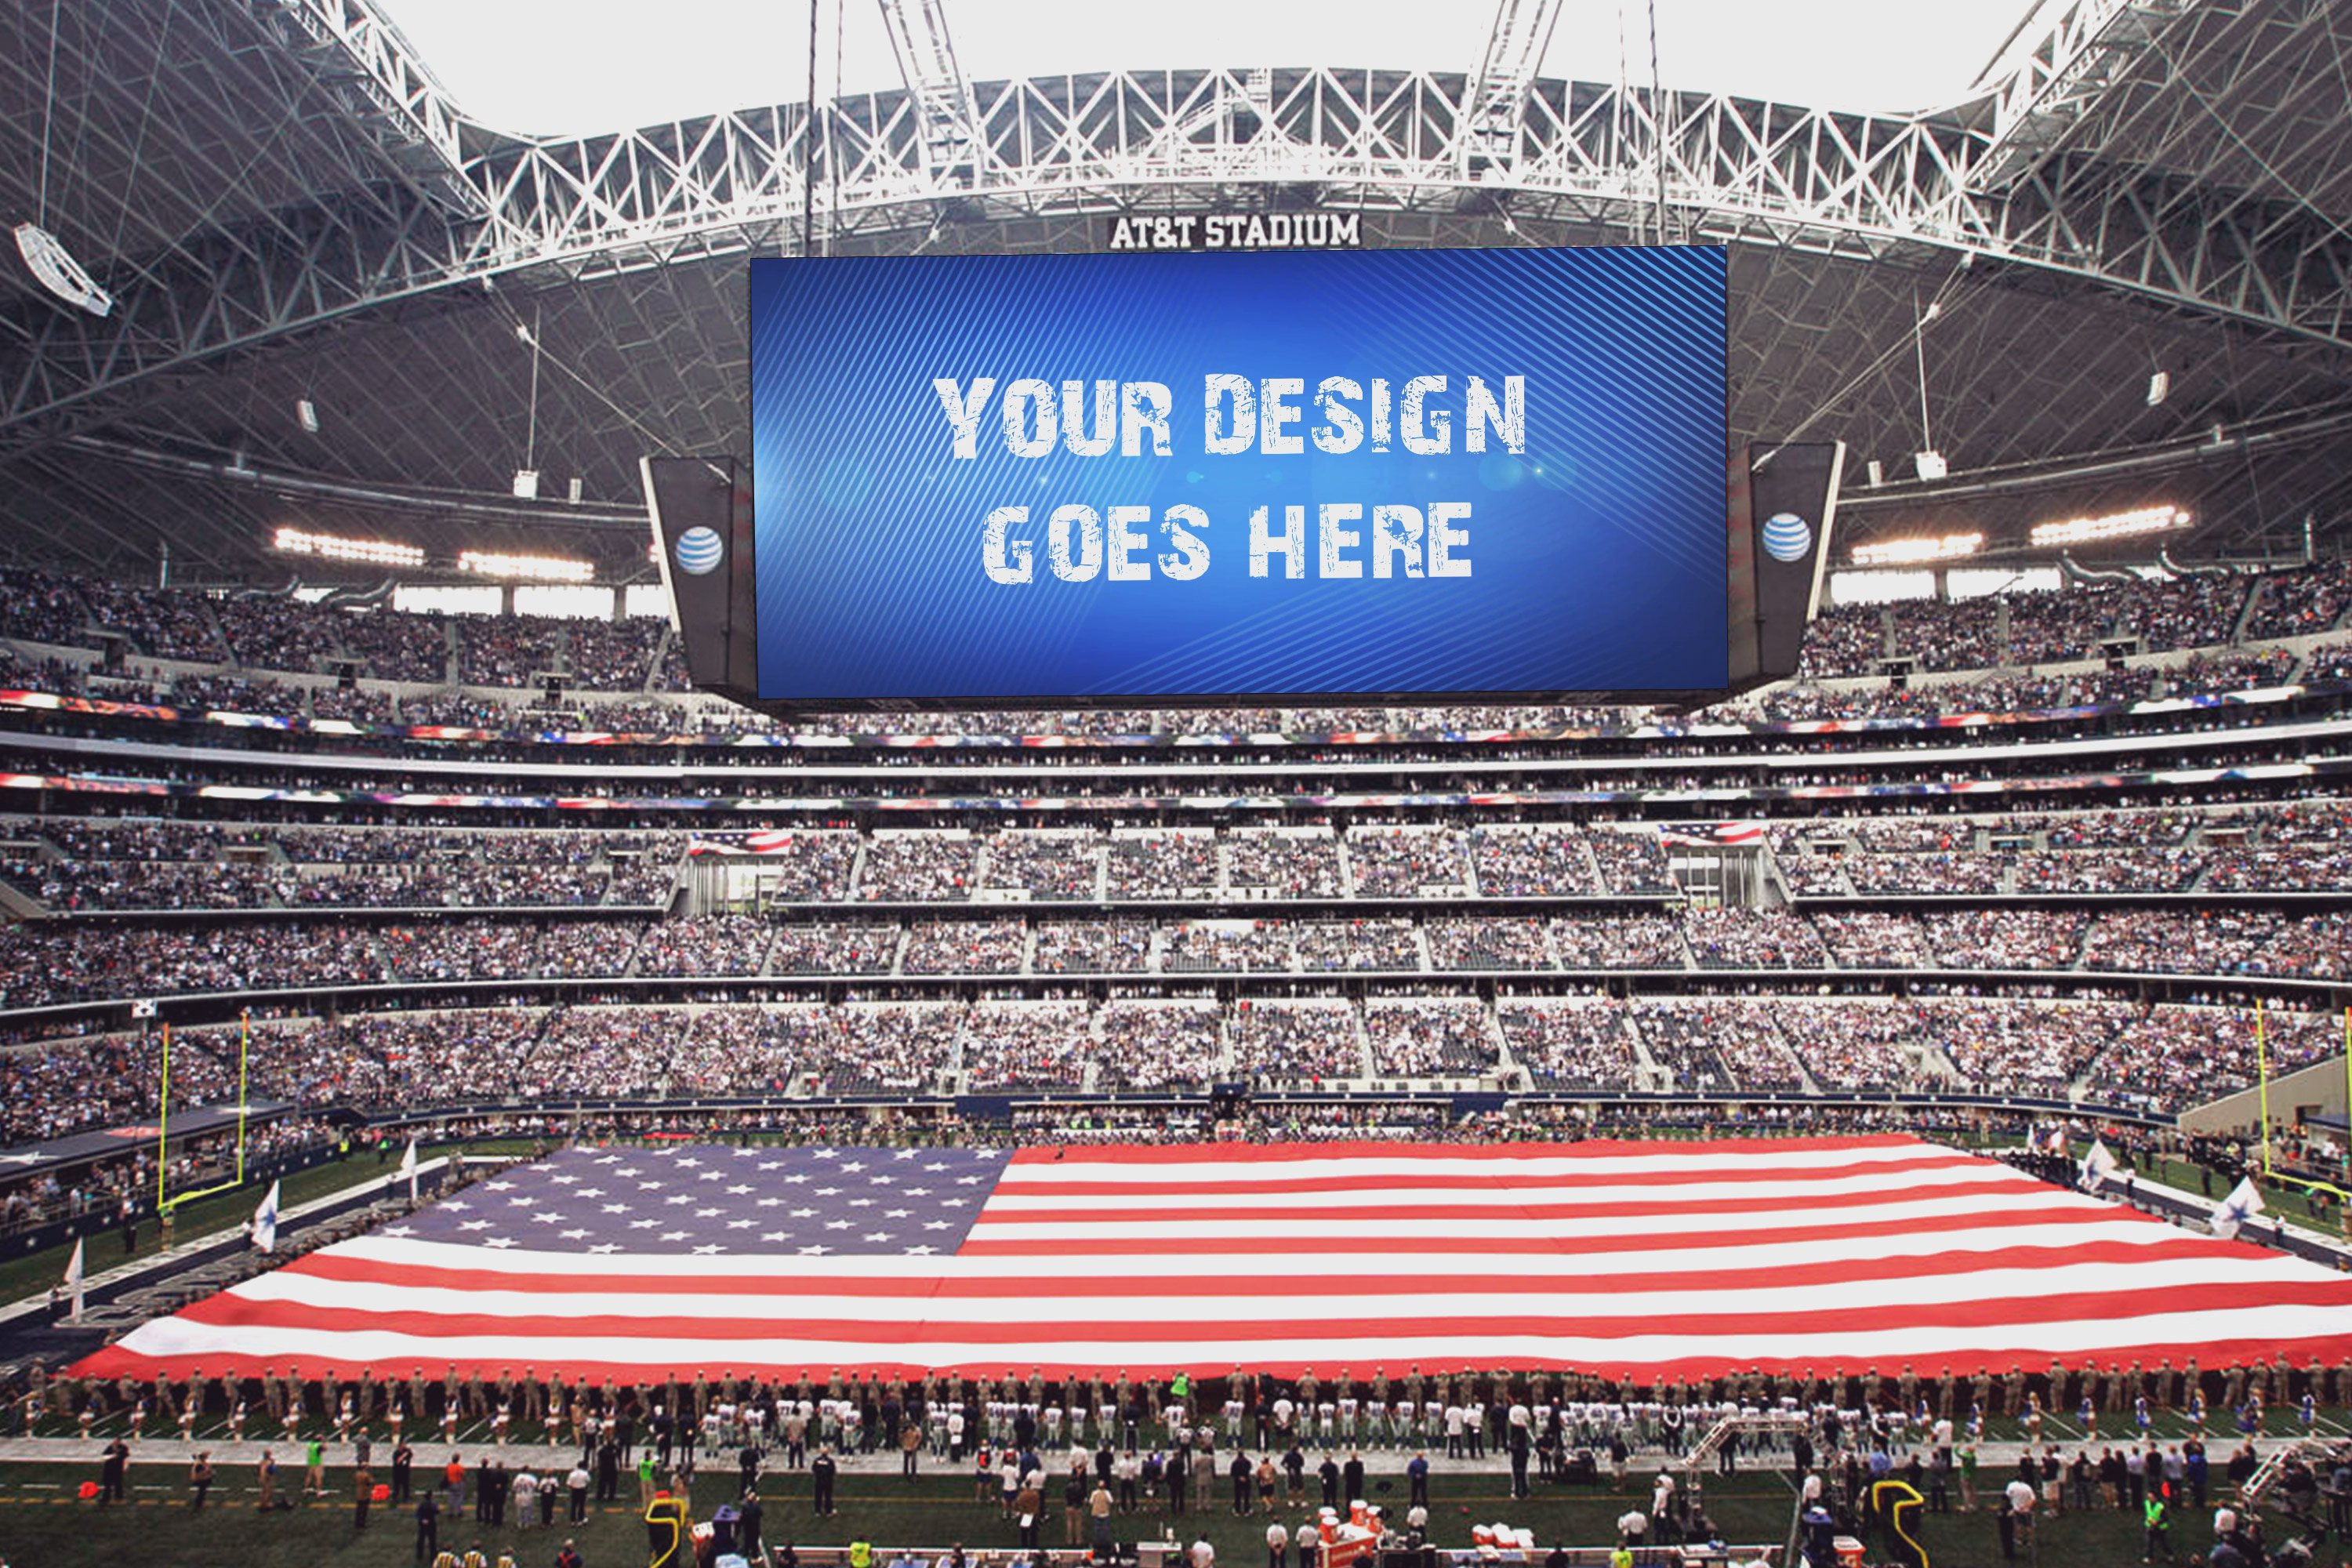 NFL Stadium Screen Mock-up #12 cover image.